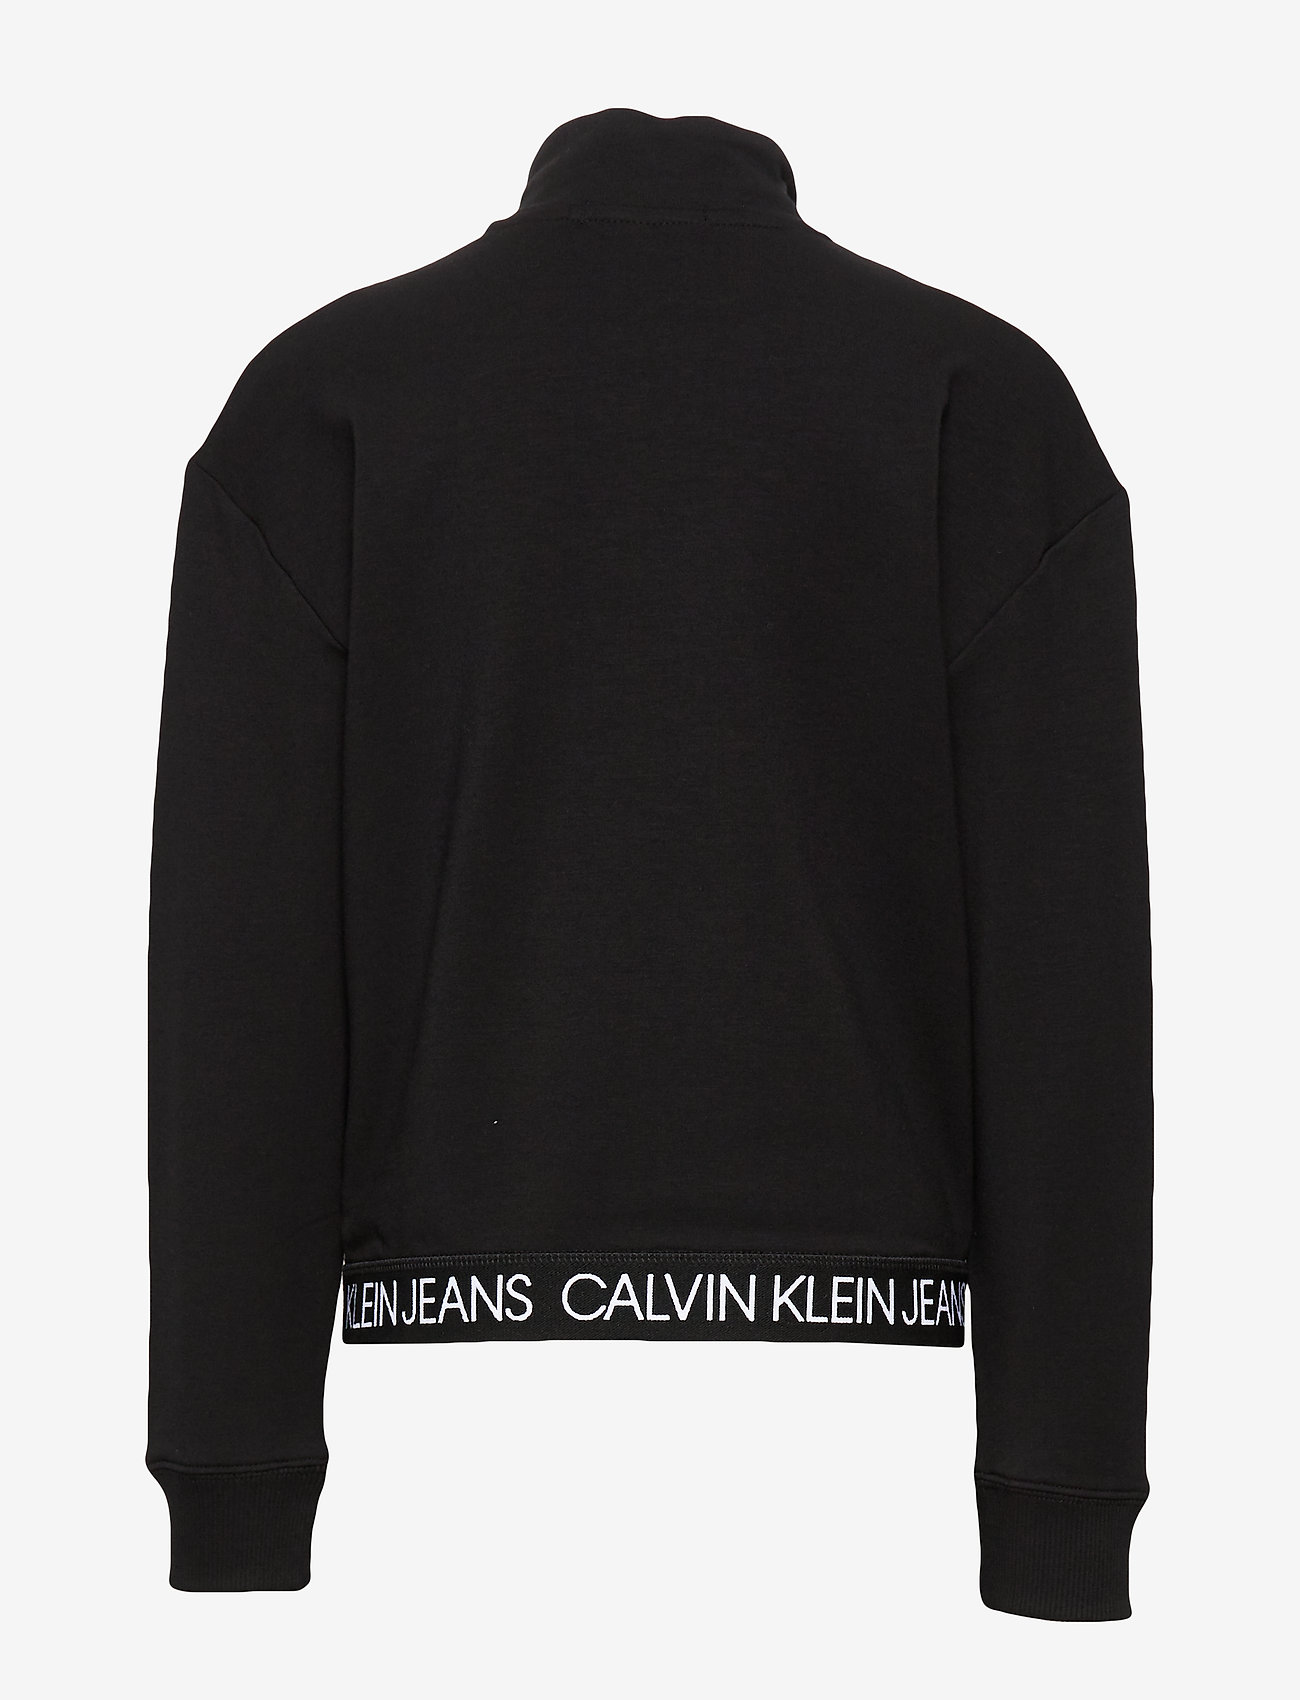 calvin klein waistband sweatshirt